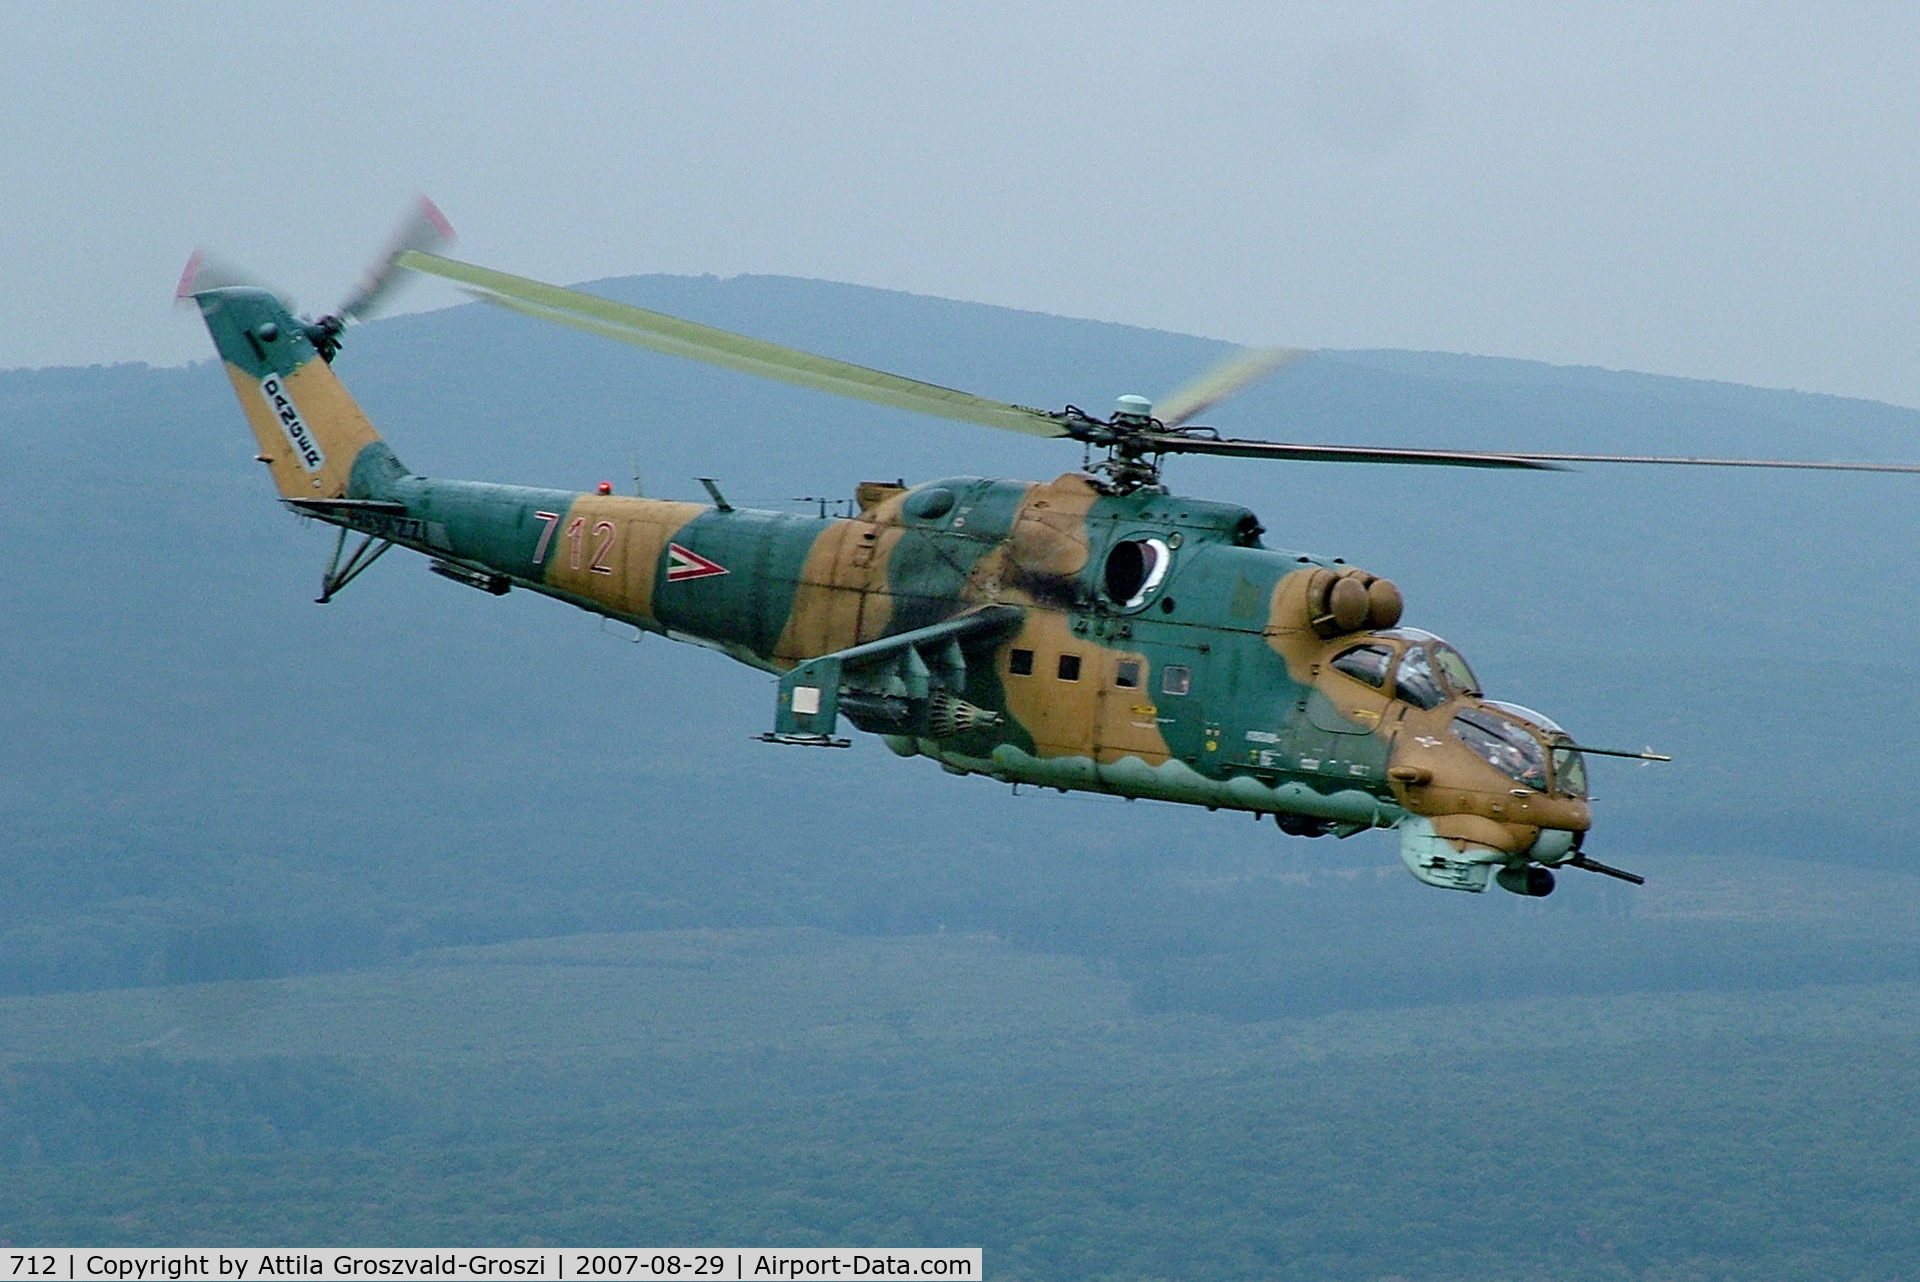 712, 1985 Mil Mi-24V Hind E C/N 220712, Jutas-Ujmajor. The Hungarian airforce is his practising base, in sharpshooting practice.